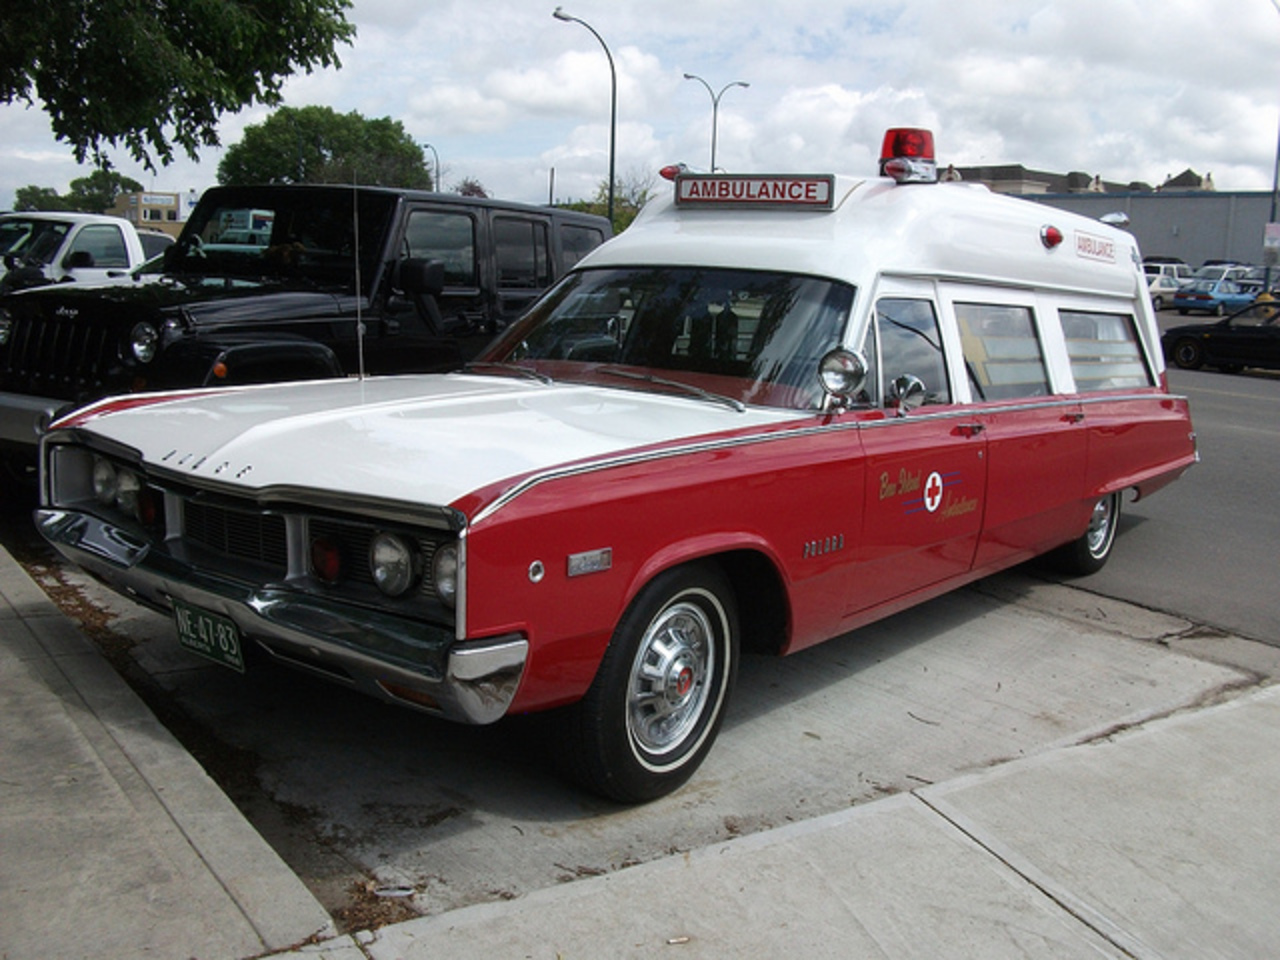 1968 Dodge Polara 500 Ambulance | Flickr - Photo Sharing!